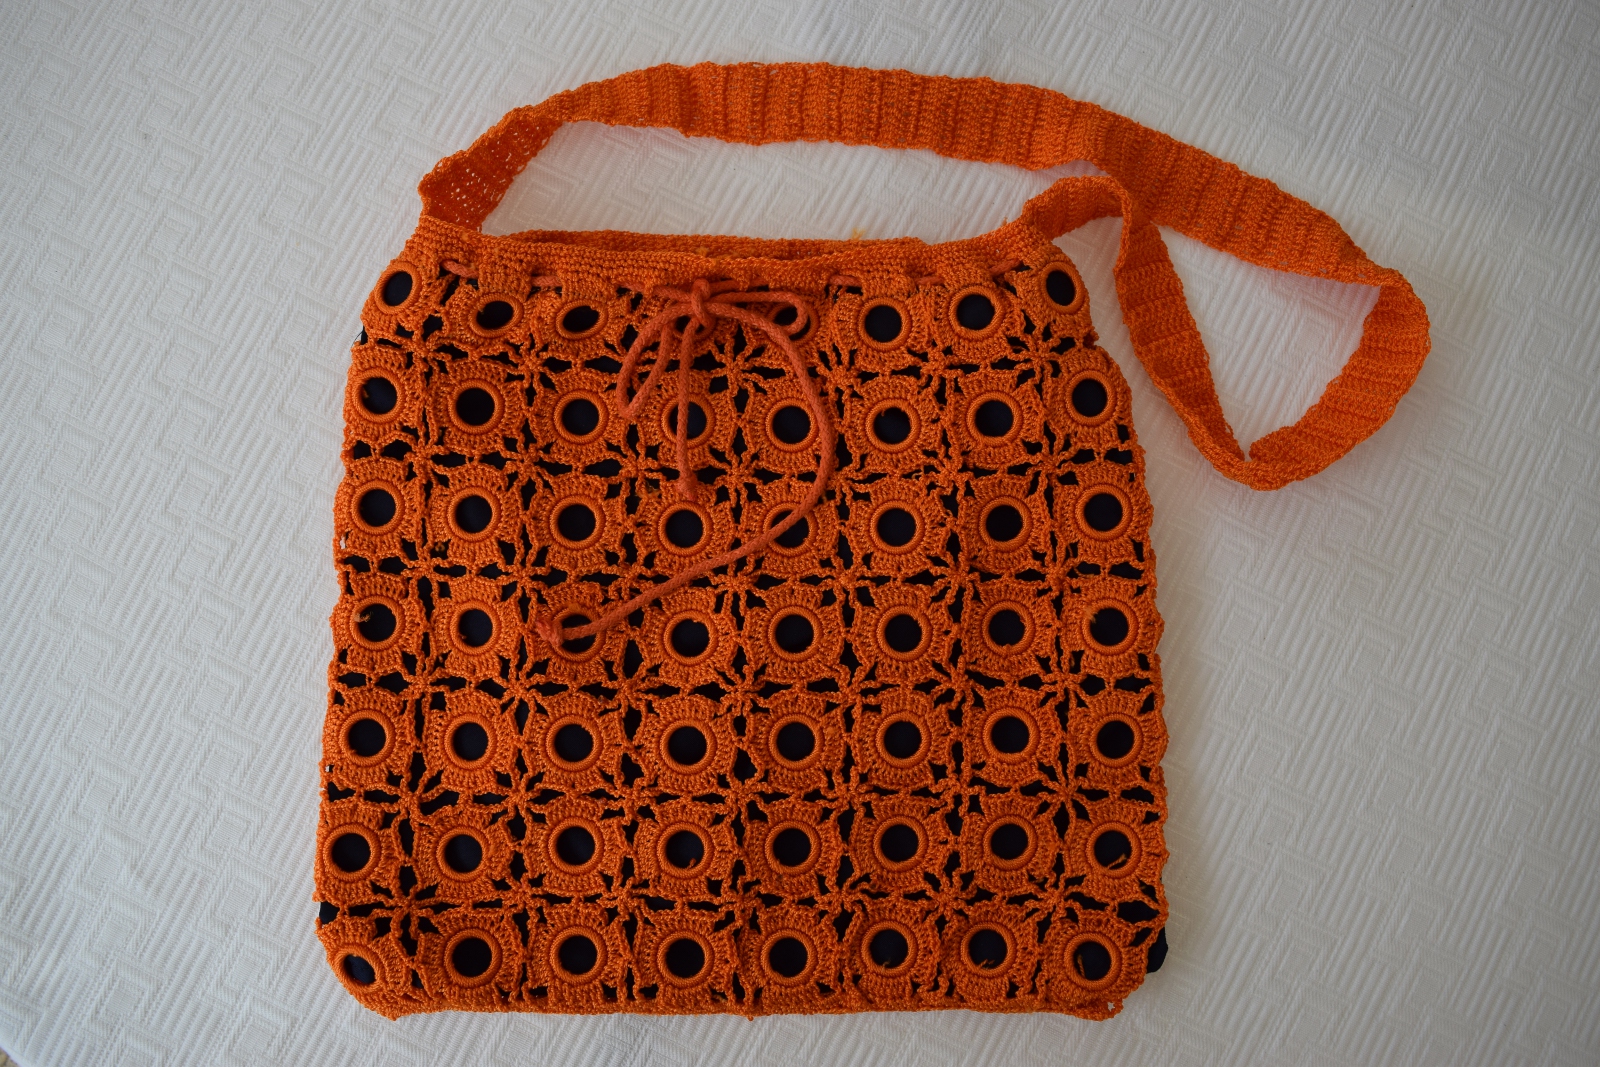 Amazon.com: Handmade Purses and Handbags for Women, Crochet Women Handbag,  Knitted Tote Handbag Shoulder Bags for Women (Crochet) : Handmade Products